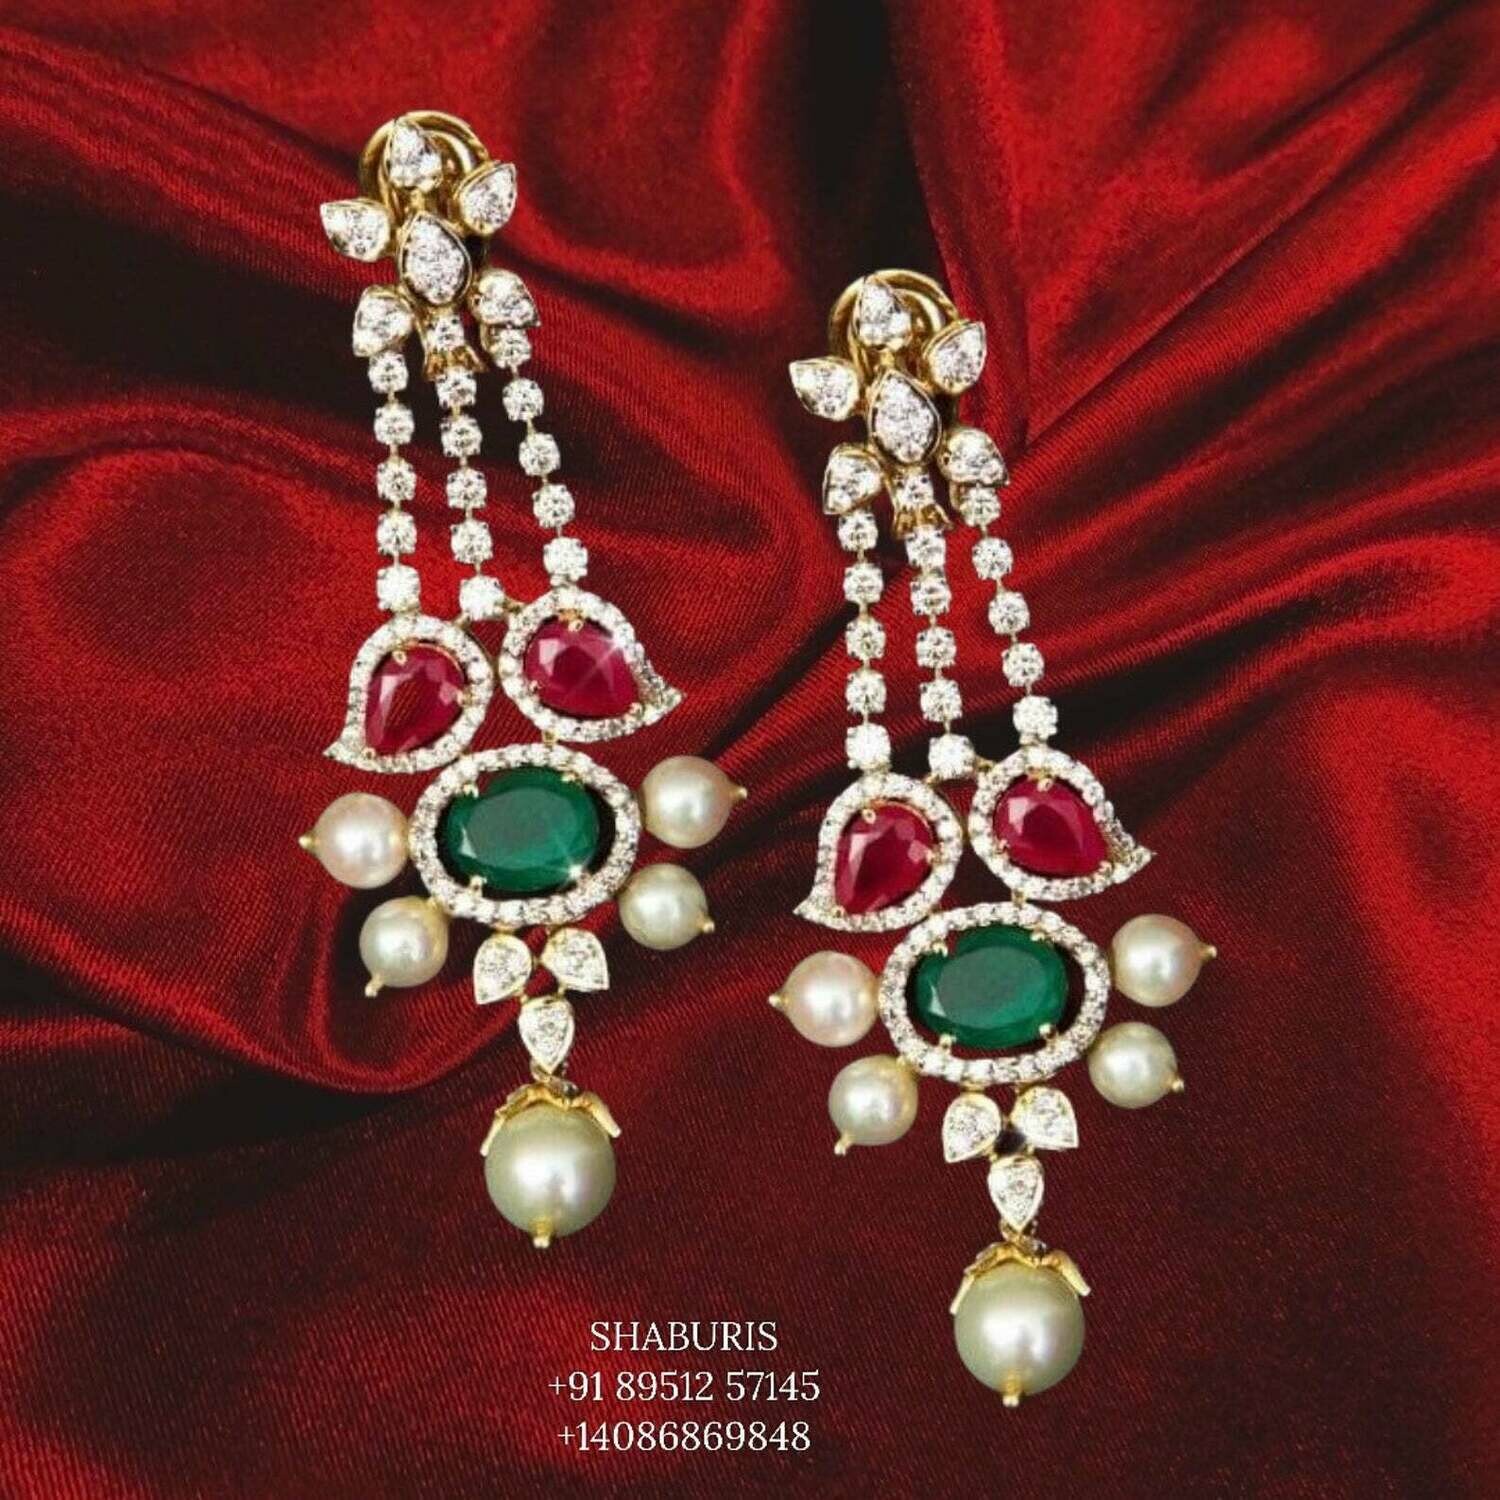 Diamond jhumka Pure Silver jewelry Indian ,diamond earrings ,Indian gold jewelry designs diamond jewelry look a like - SHABURIS